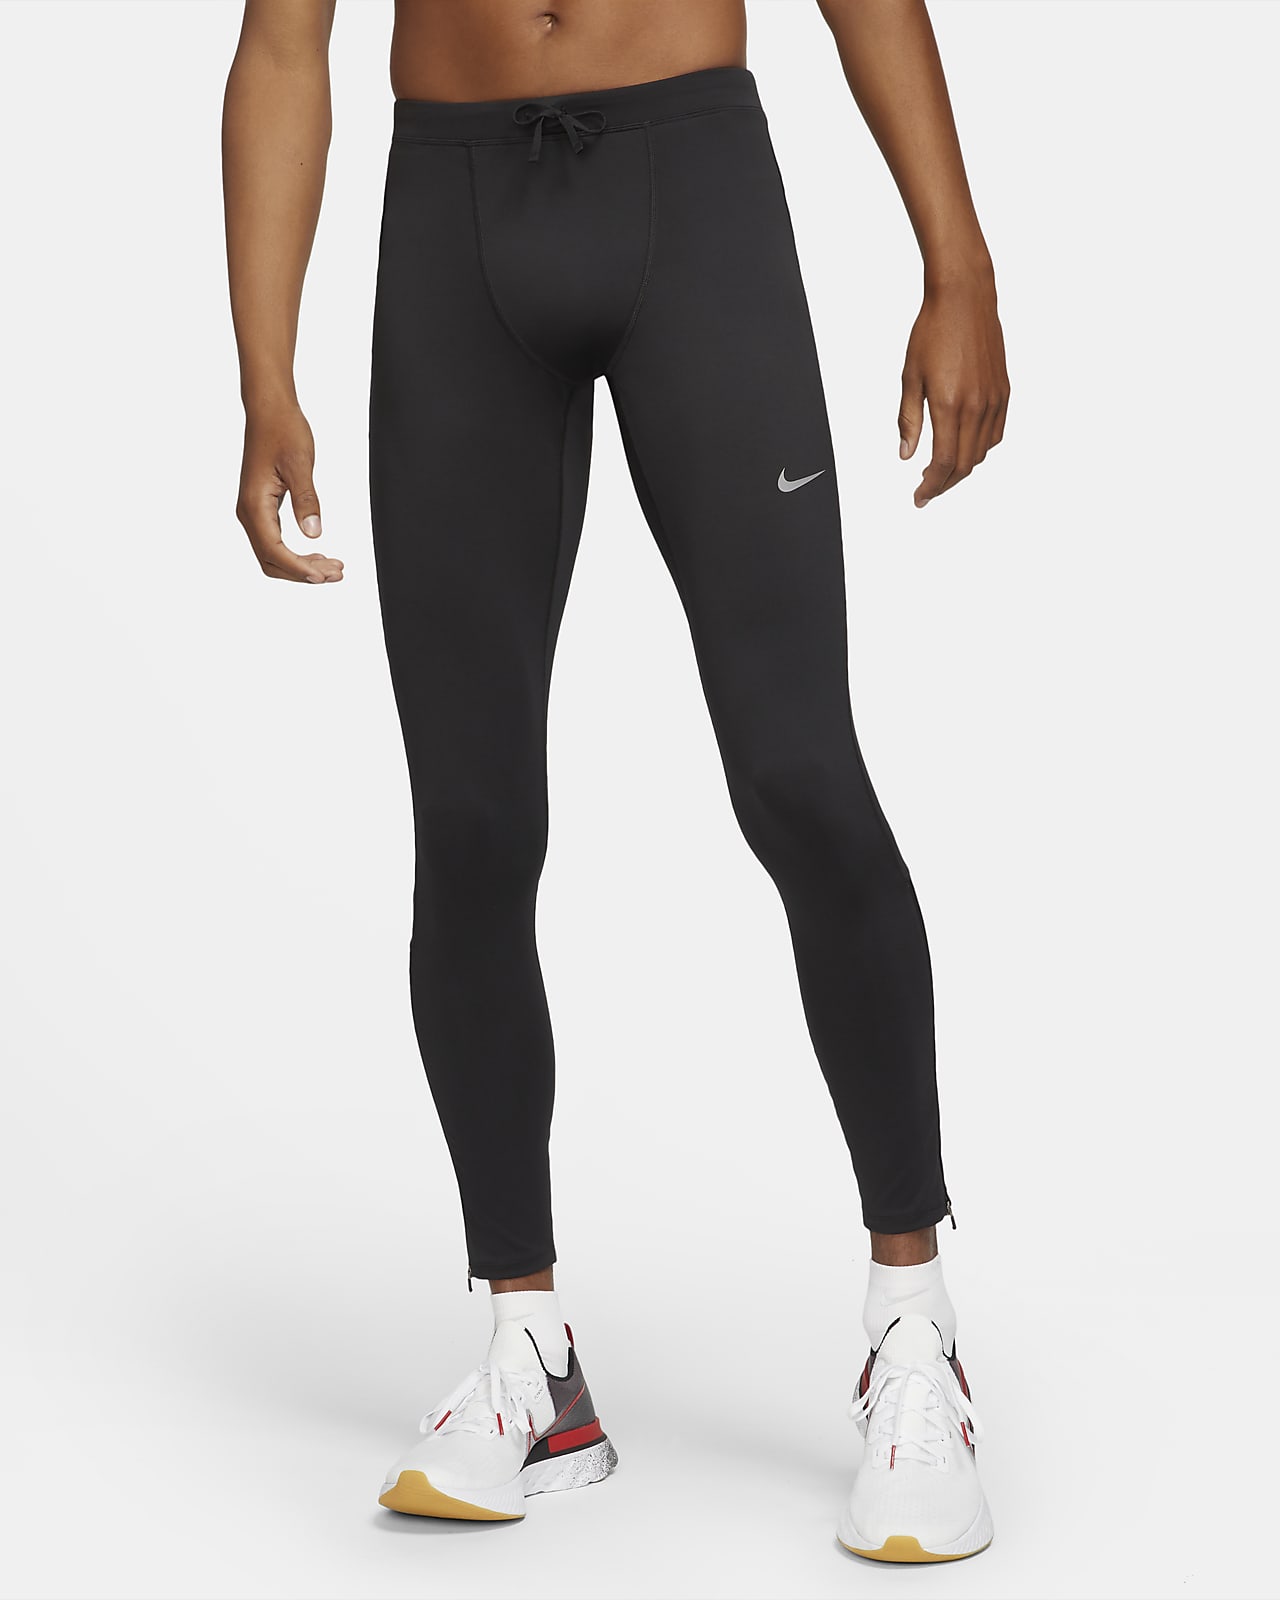 Mantenimiento Persona australiana Tarjeta postal Nike Dri-FIT Challenger Mallas de running - Hombre. Nike ES